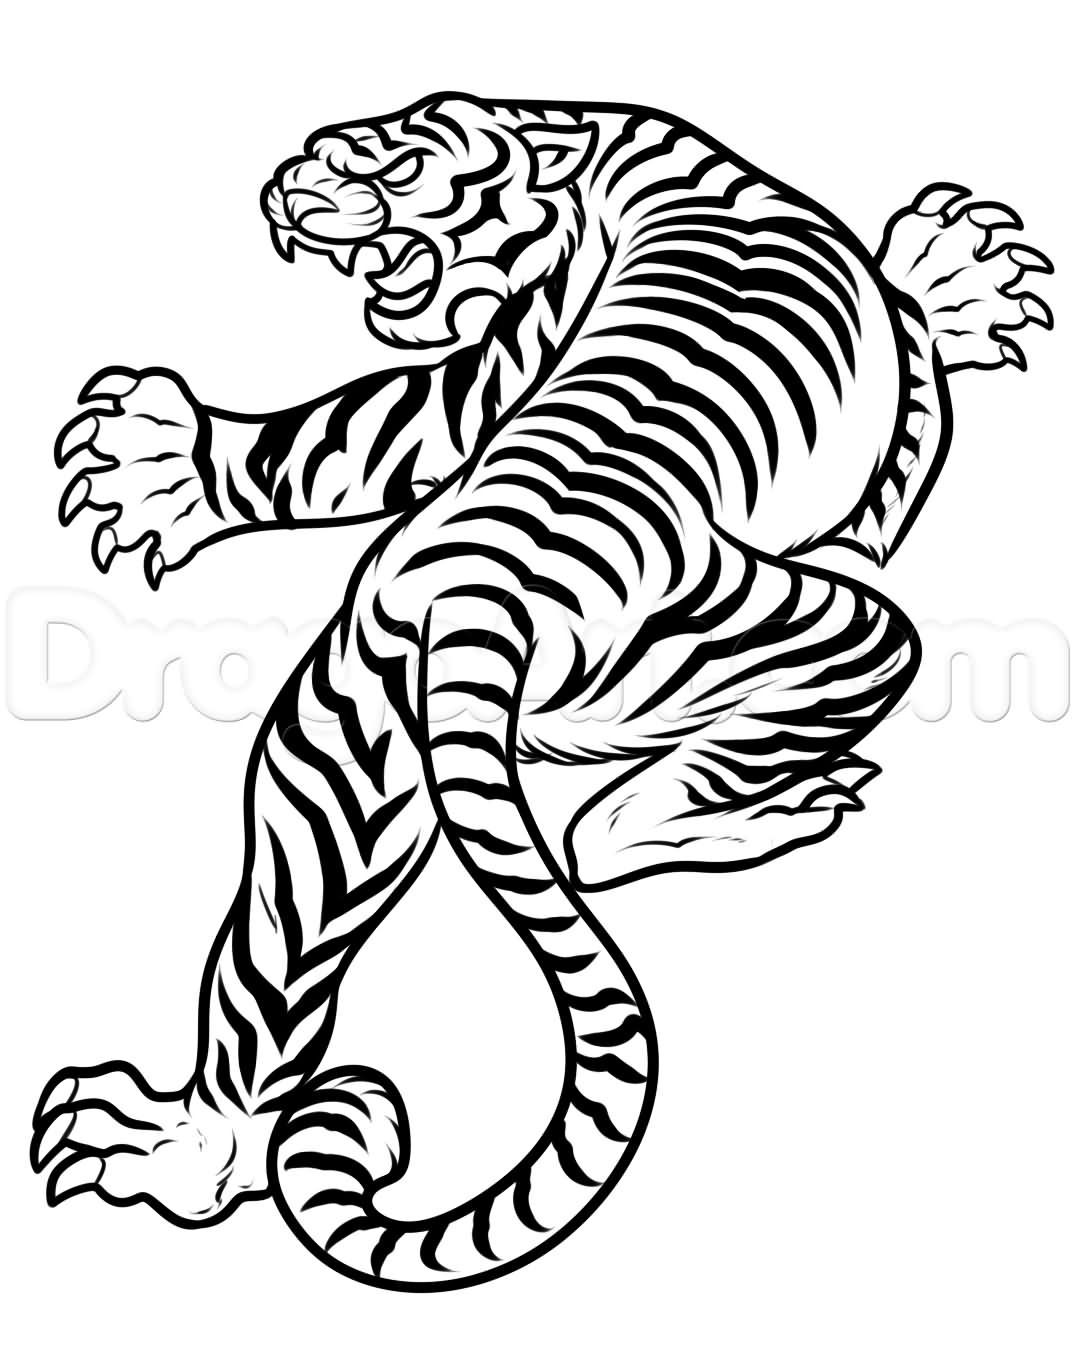 Black & White Climbing Tiger Tattoo Stencil